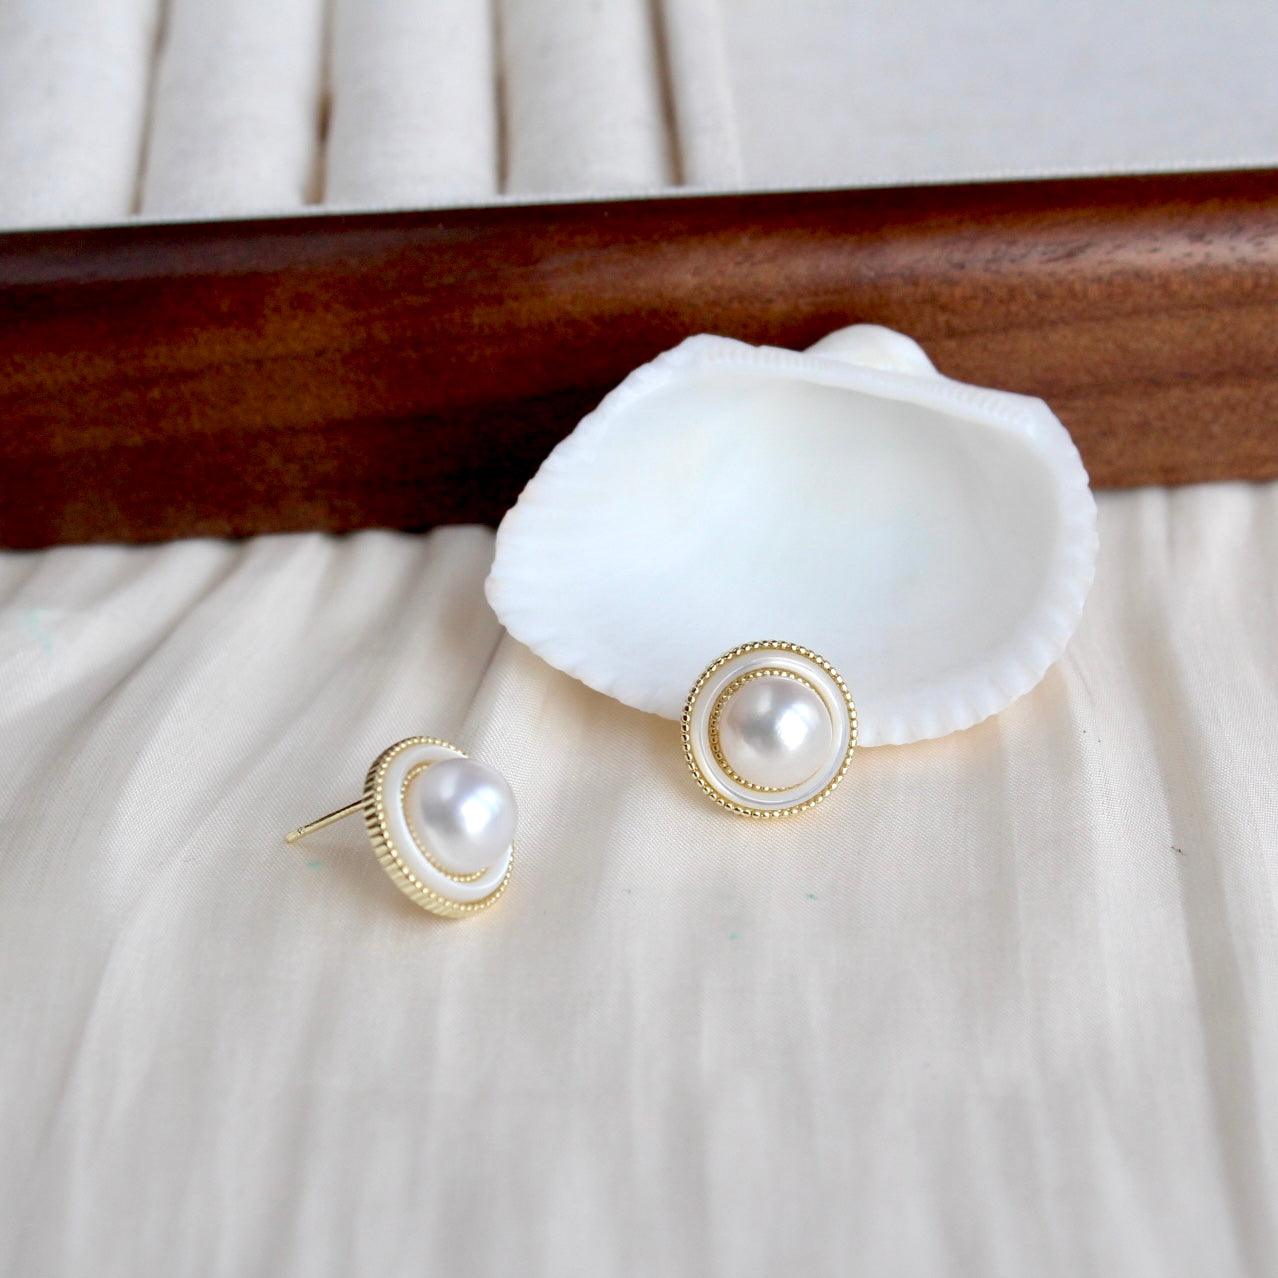 Anna｜ Perlmutt-Ring mit Perlen - JK Jewelry & Accessories